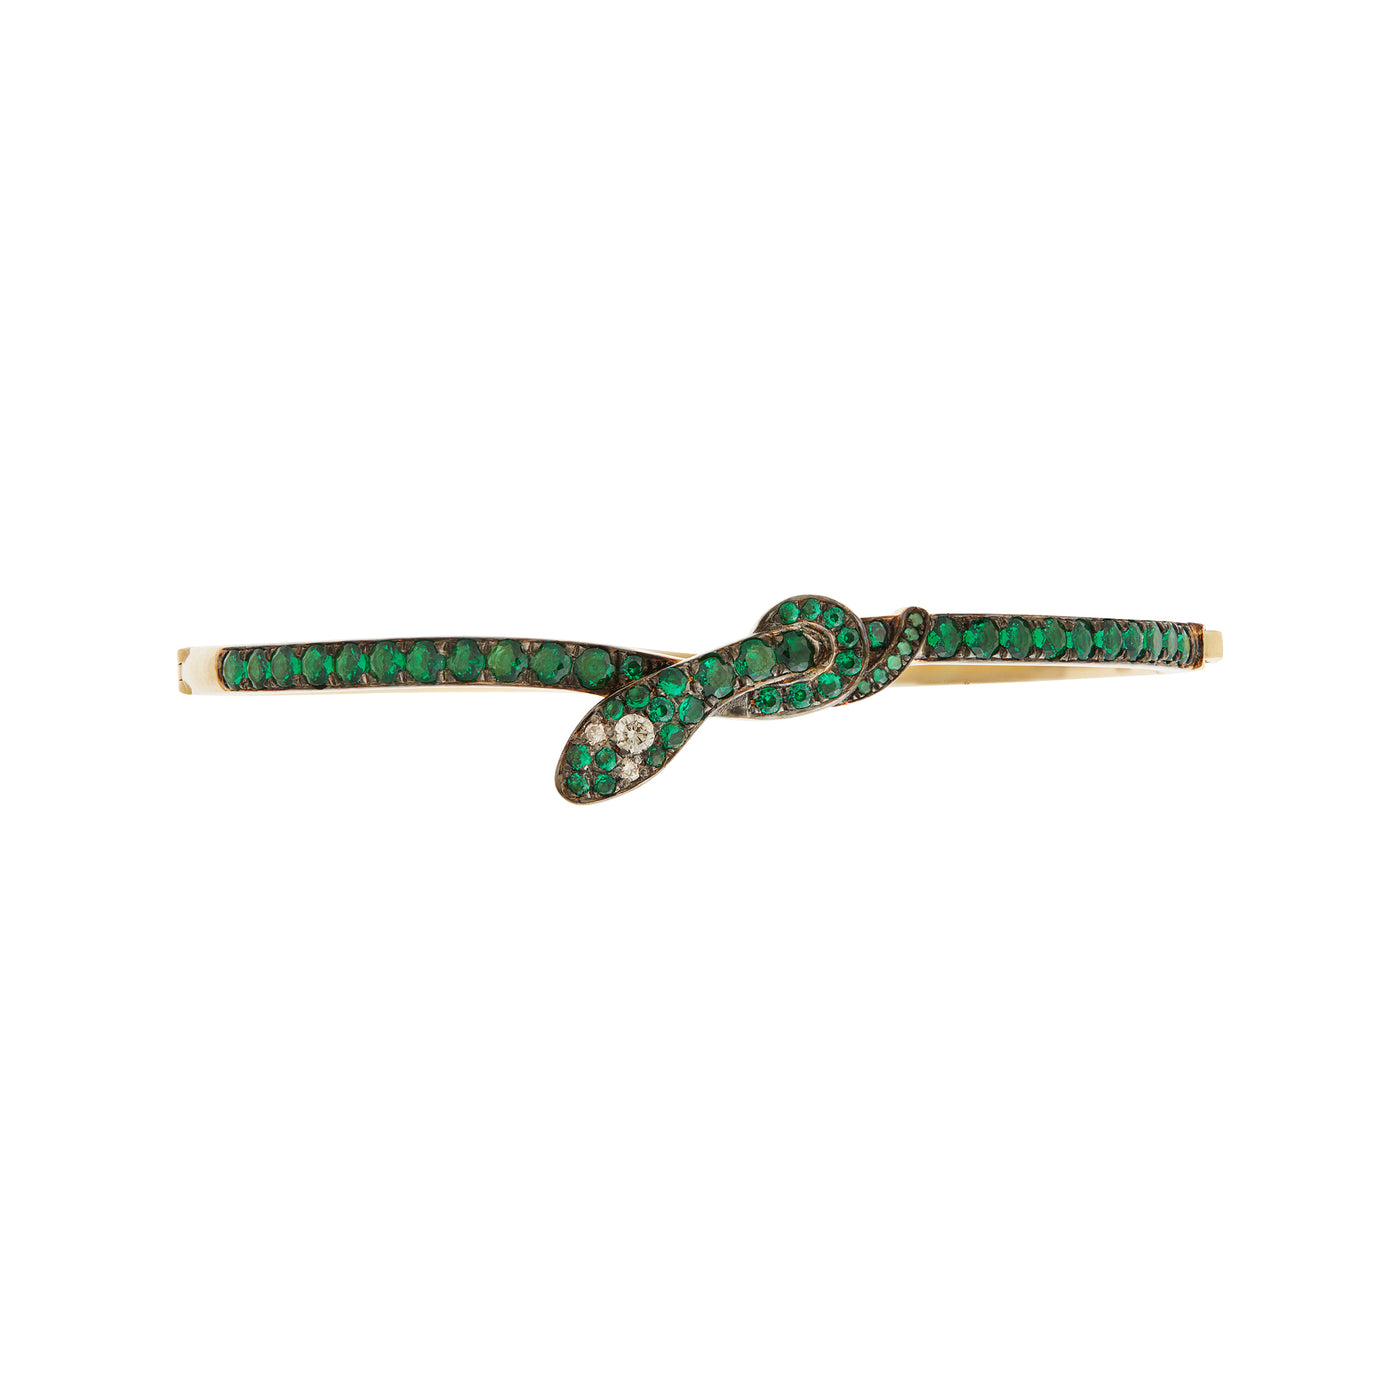 Coiled Snake Emerald Bangle - SNAKES - Ileana Makri store